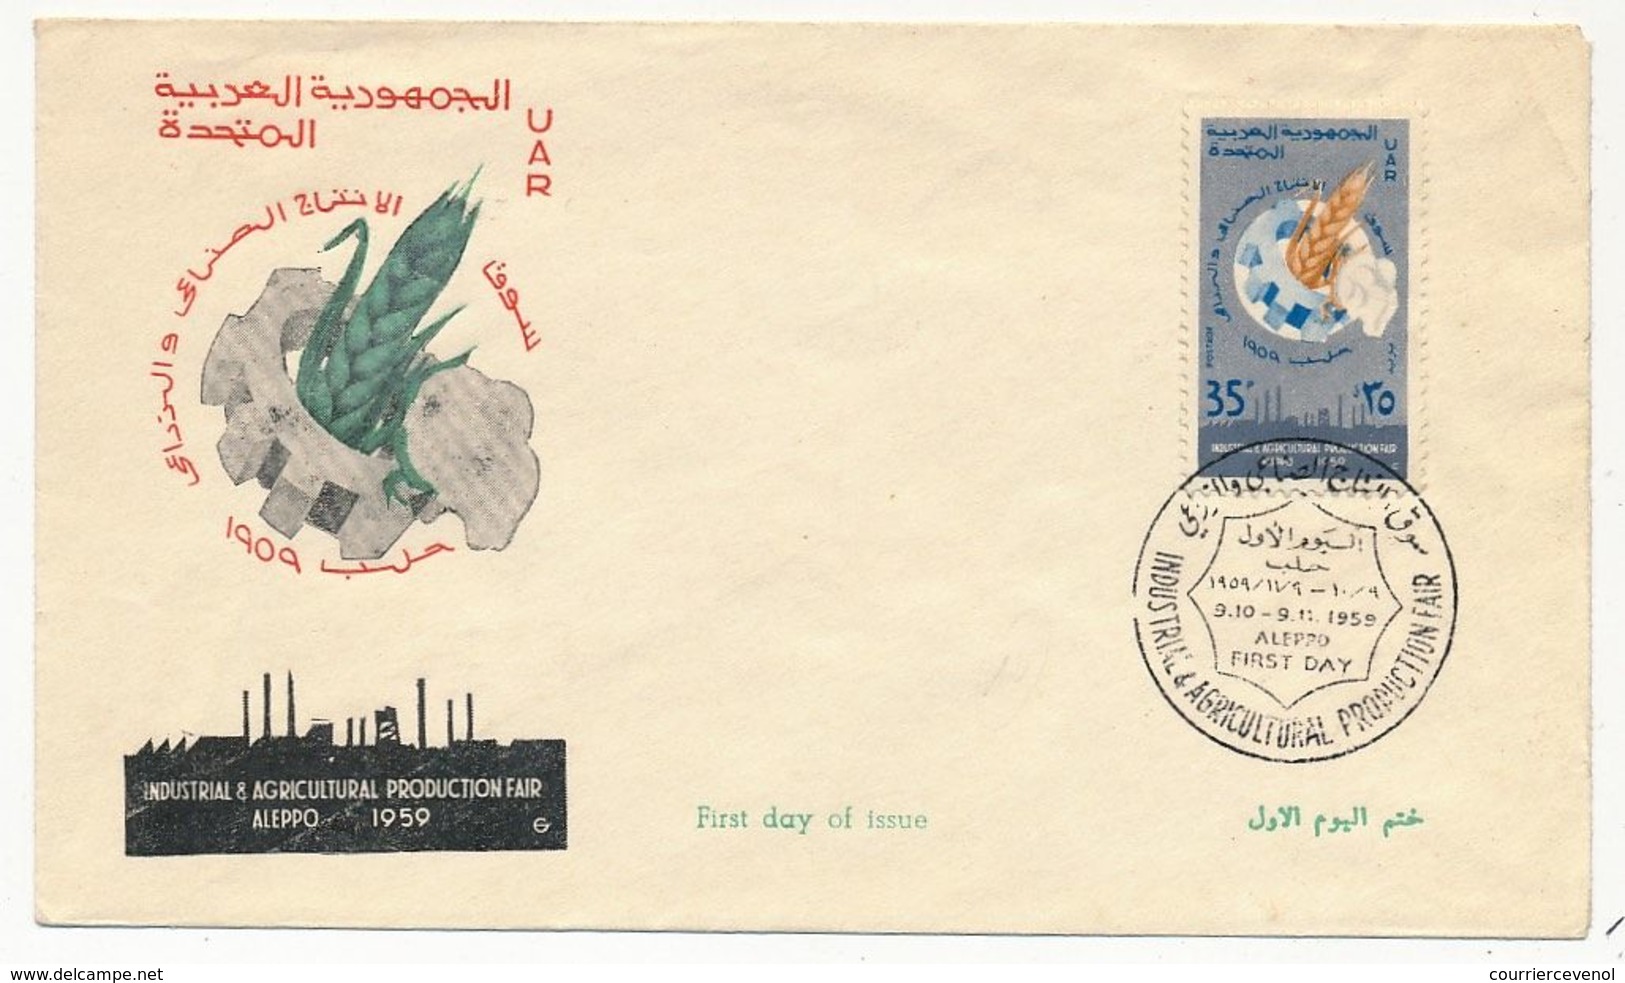 EGYPTE UAR - FDC - Industrial & Agricultural Fair 1959 - Le Caire - 9/11/1959 - Lettres & Documents